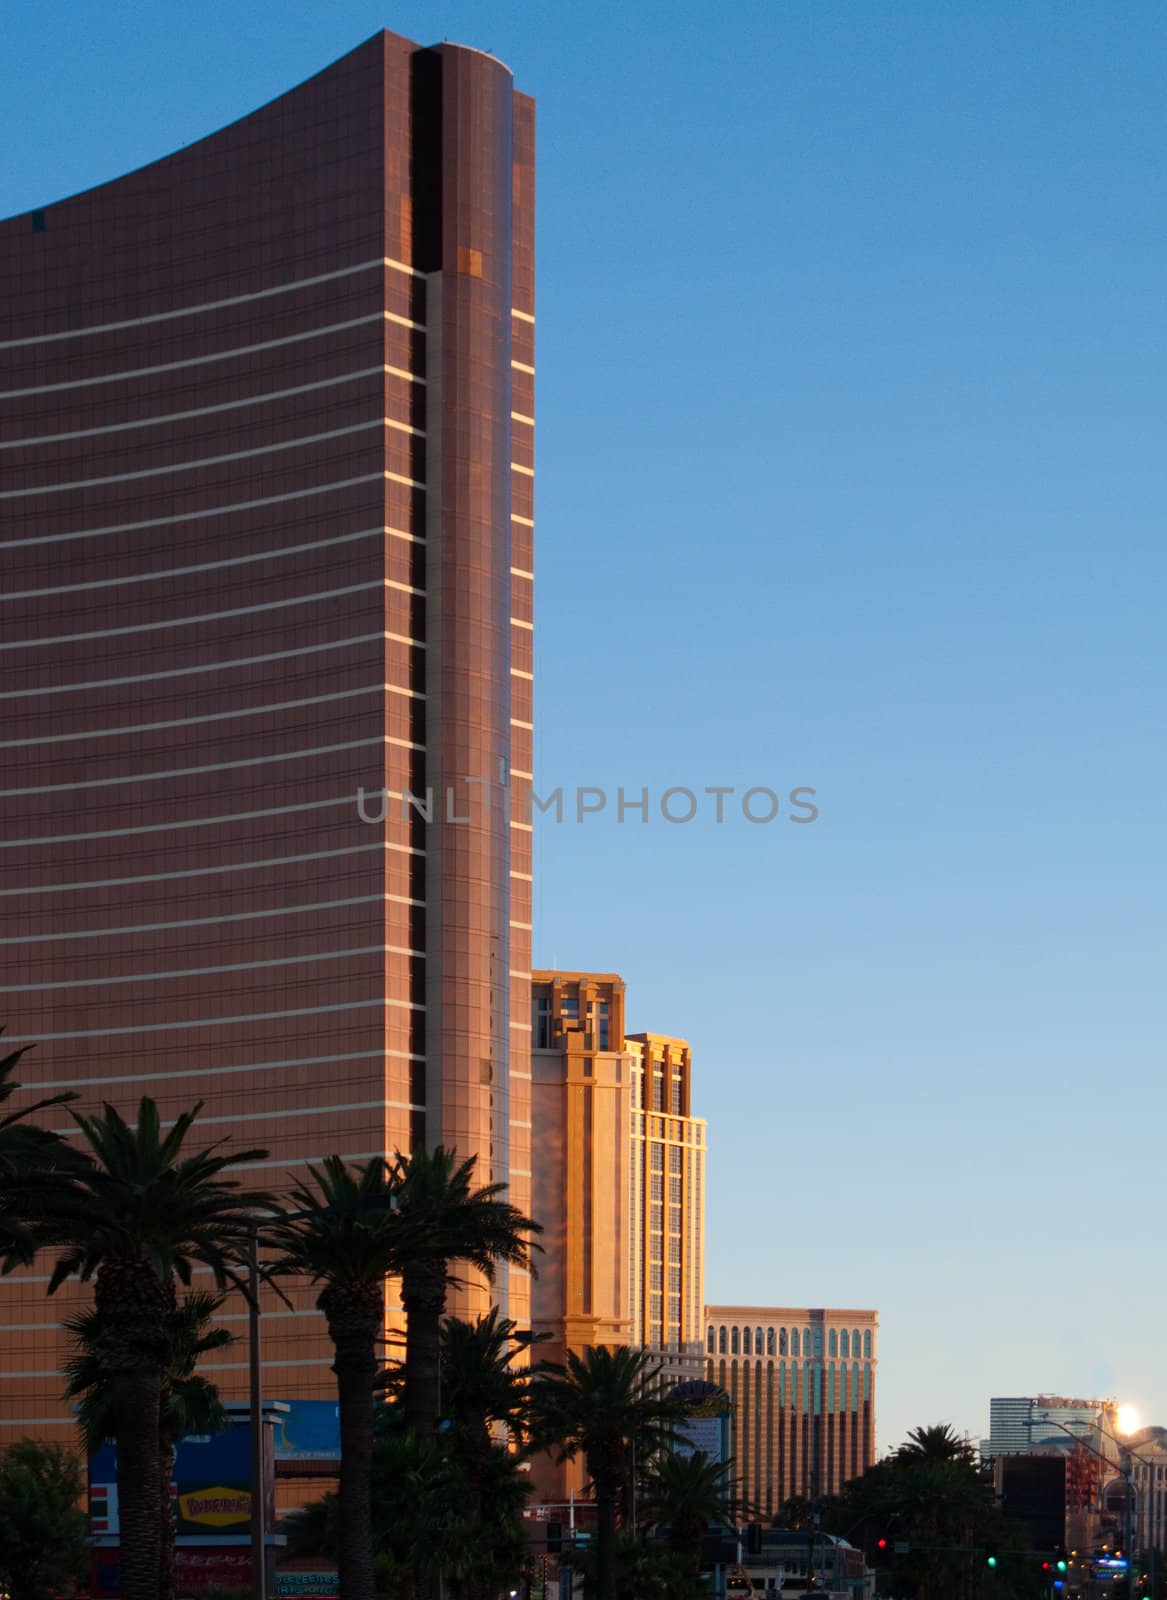 Buildings on the Las Vegas Strip by edan